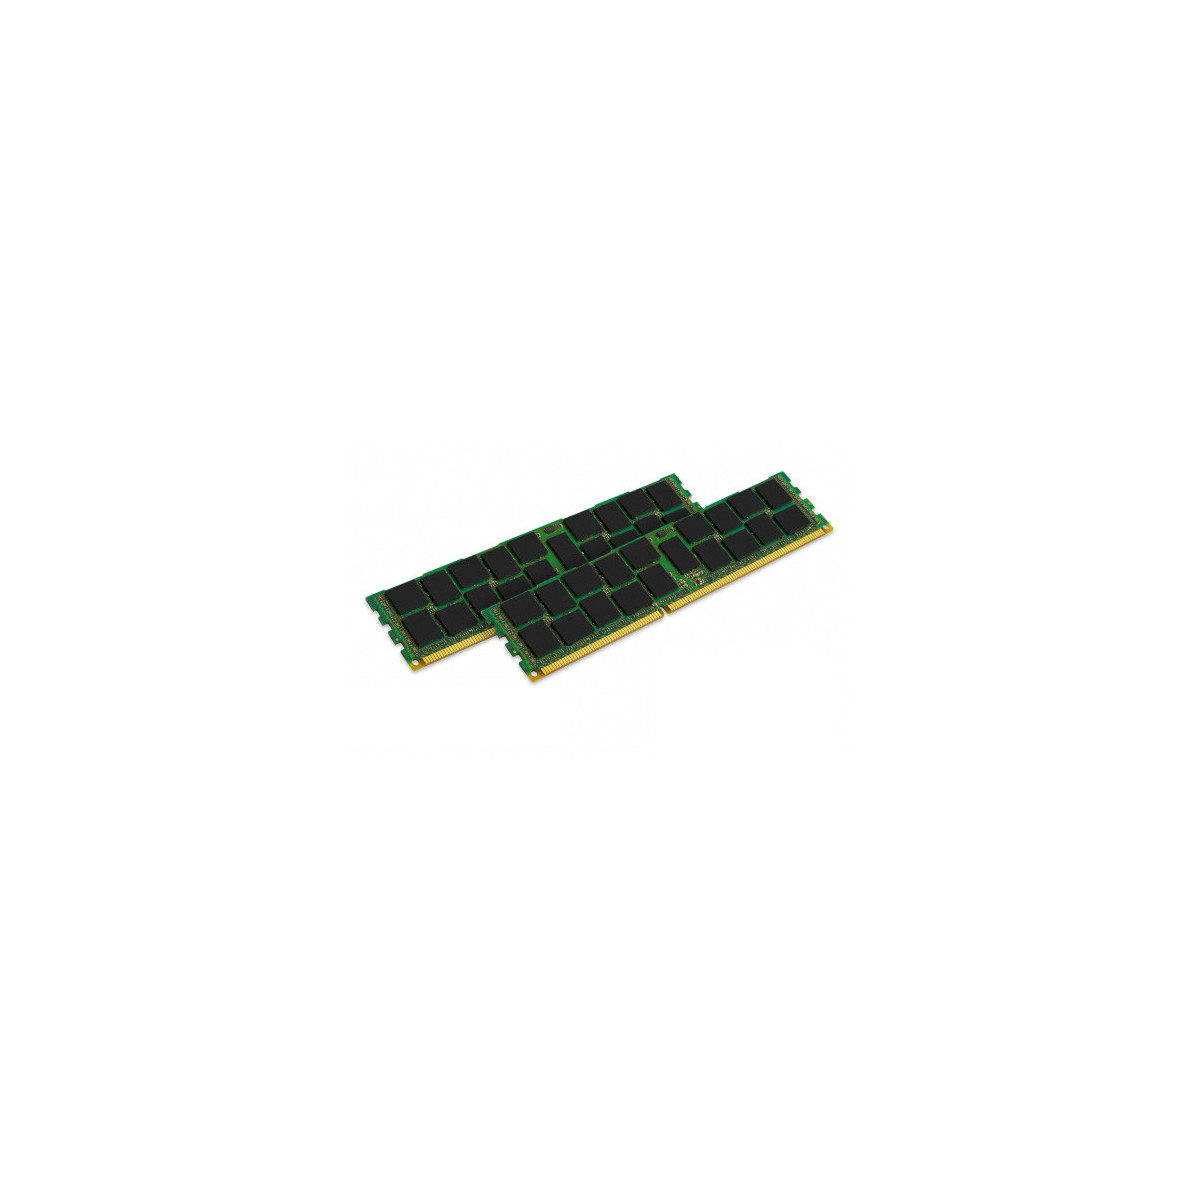 MODULE DE RAM 32 Go (2 x 16 GO)-DDR3 SDRAM-1866 MHz - KINGSTON